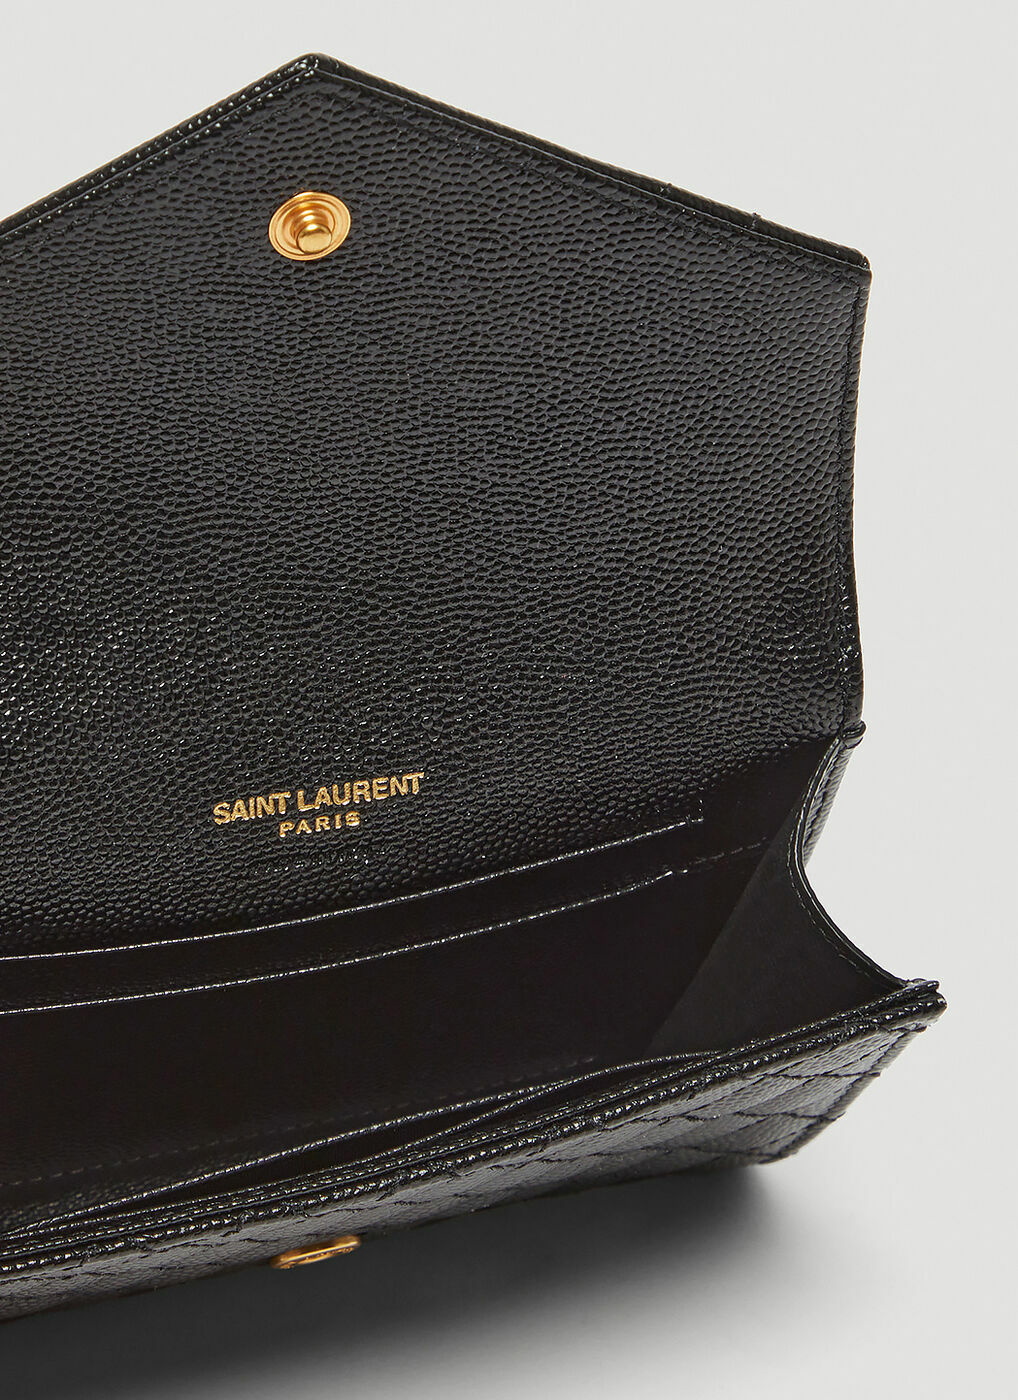 Saint Laurent Paris Beige Matelasse Leather Envelope Shoulder Bag